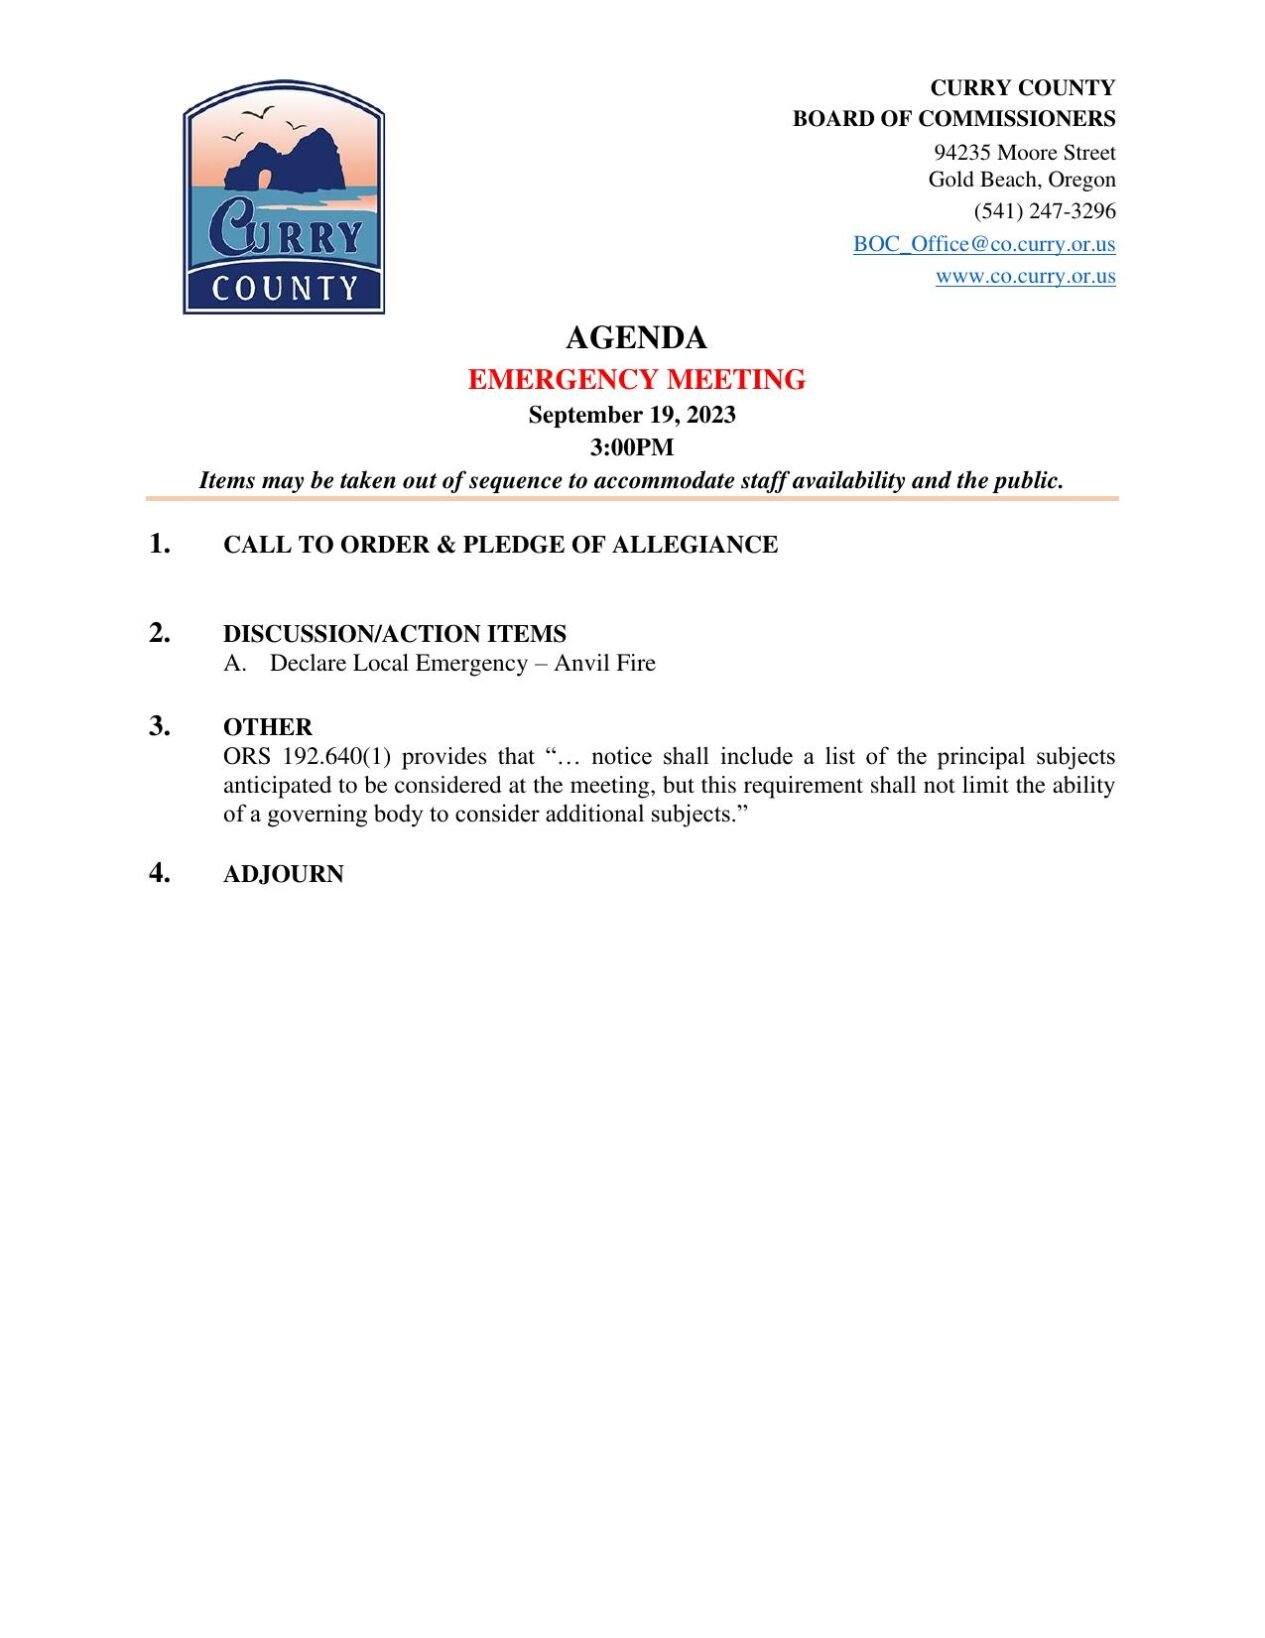 9-19-2023 EMERGENCY MEETING AGENDA.pdf